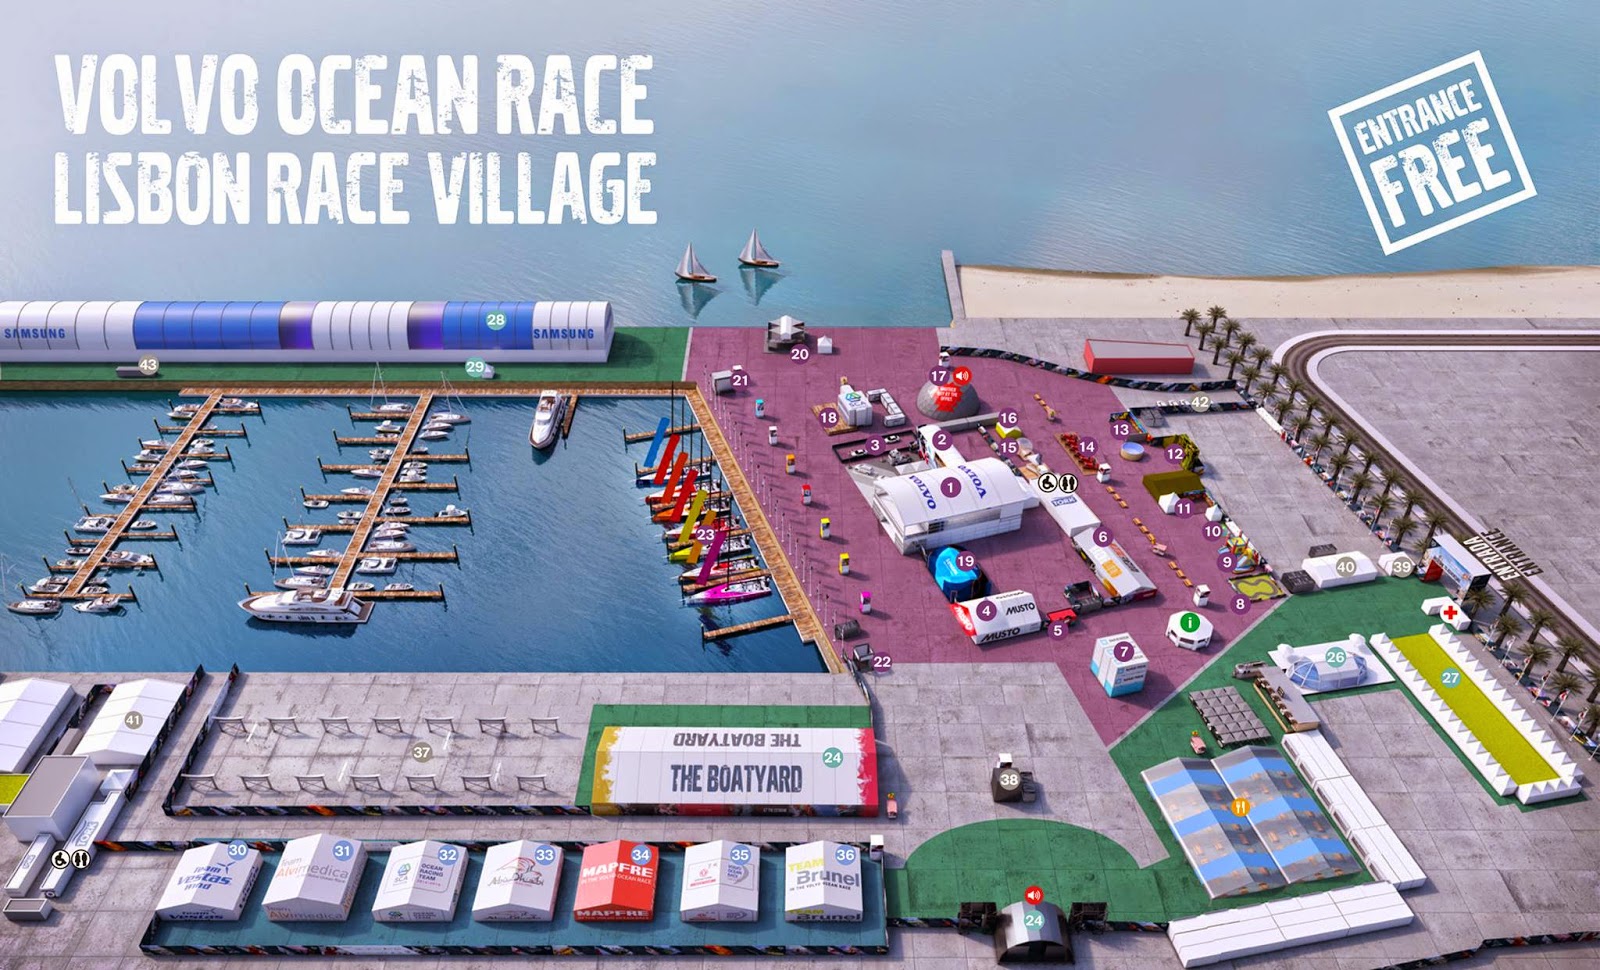 CARTAZ VOLVO OCEAN RACE 2015